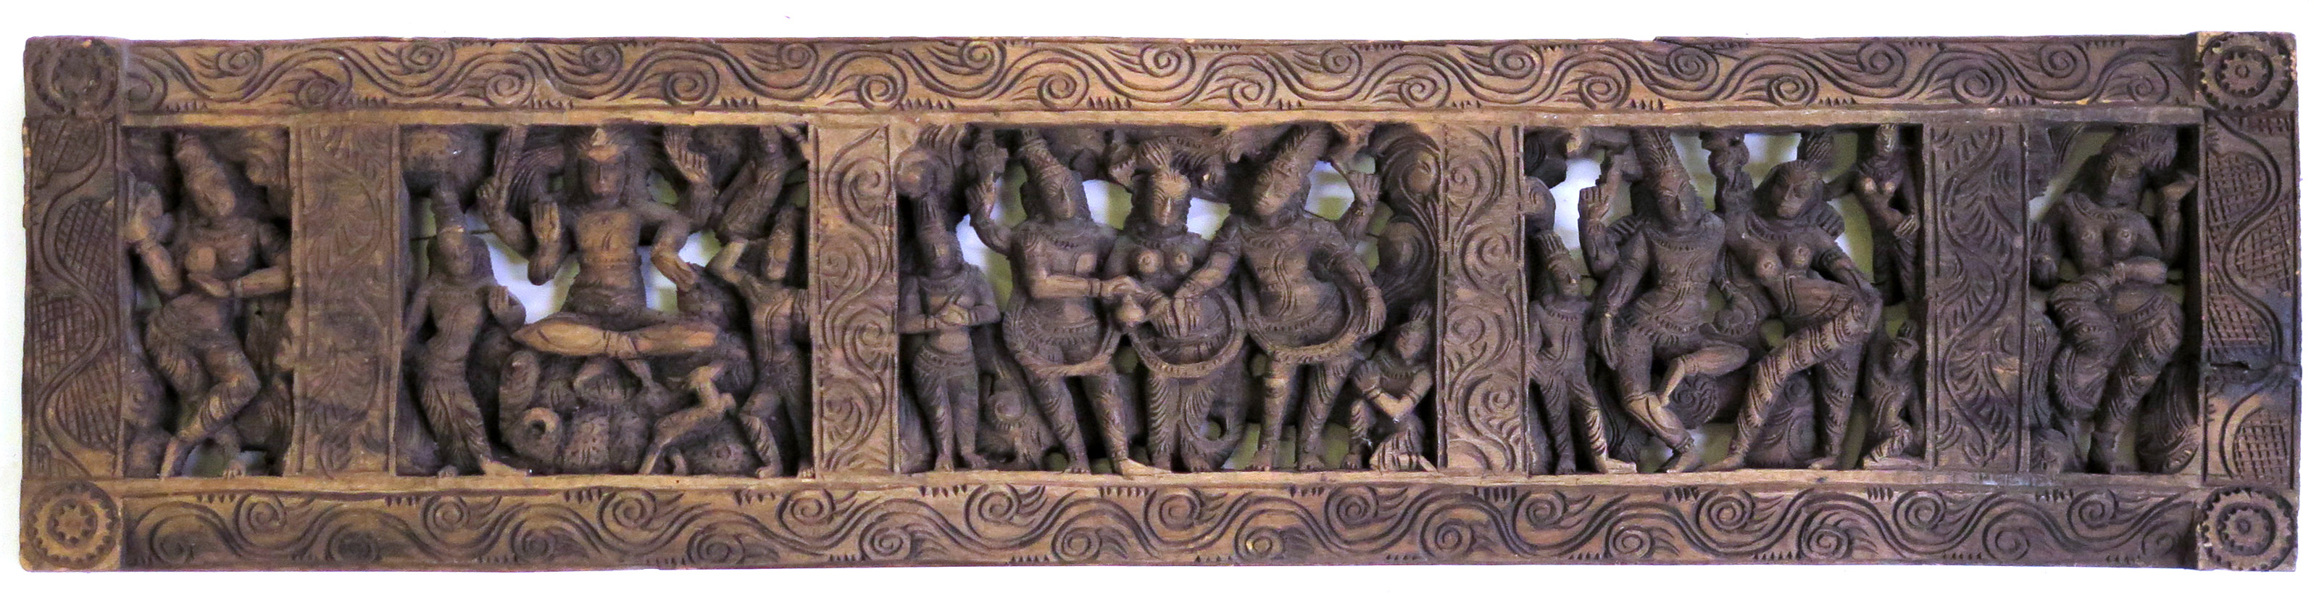 Relief, skuret trä, Indien, 1900-tal, _11994a_lg.jpeg